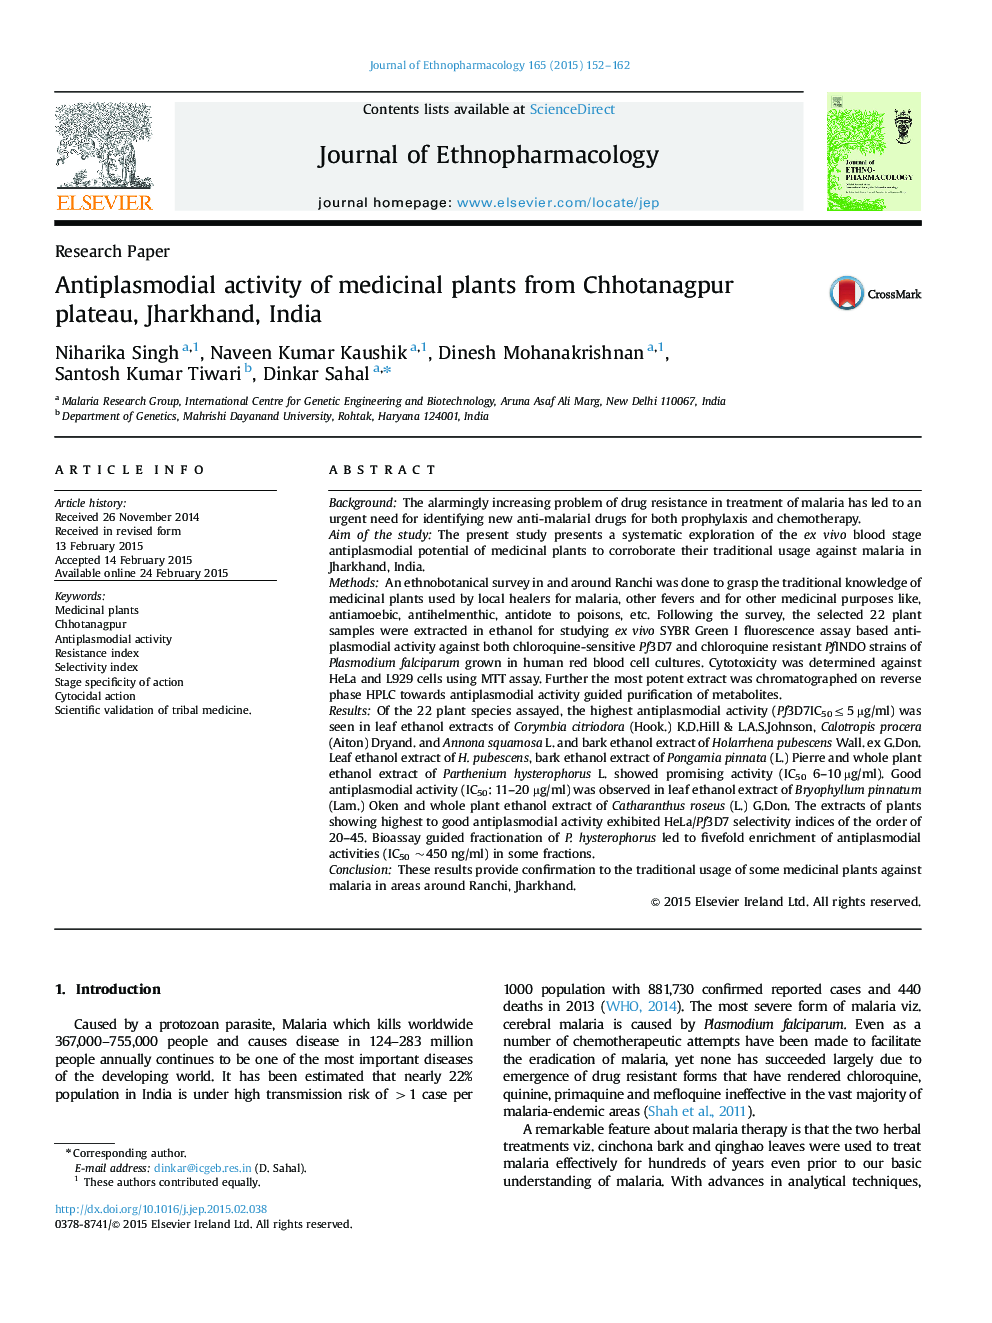 Antiplasmodial activity of medicinal plants from Chhotanagpur plateau, Jharkhand, India